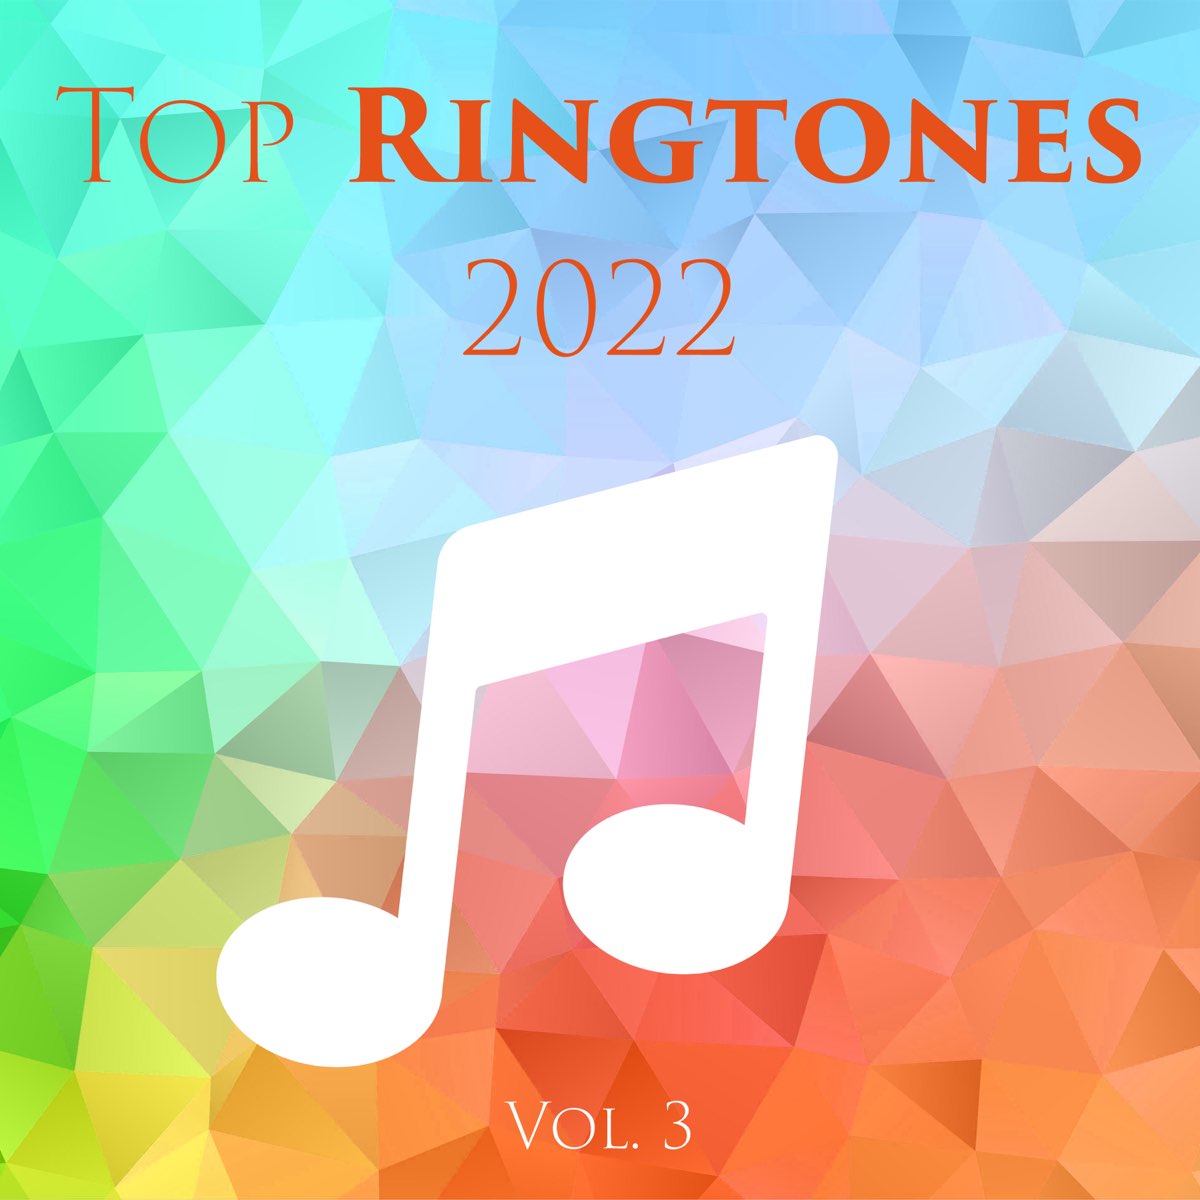 ‎Top Ringtones 2022 Vol. 3 by SoundsWorld on Apple Music